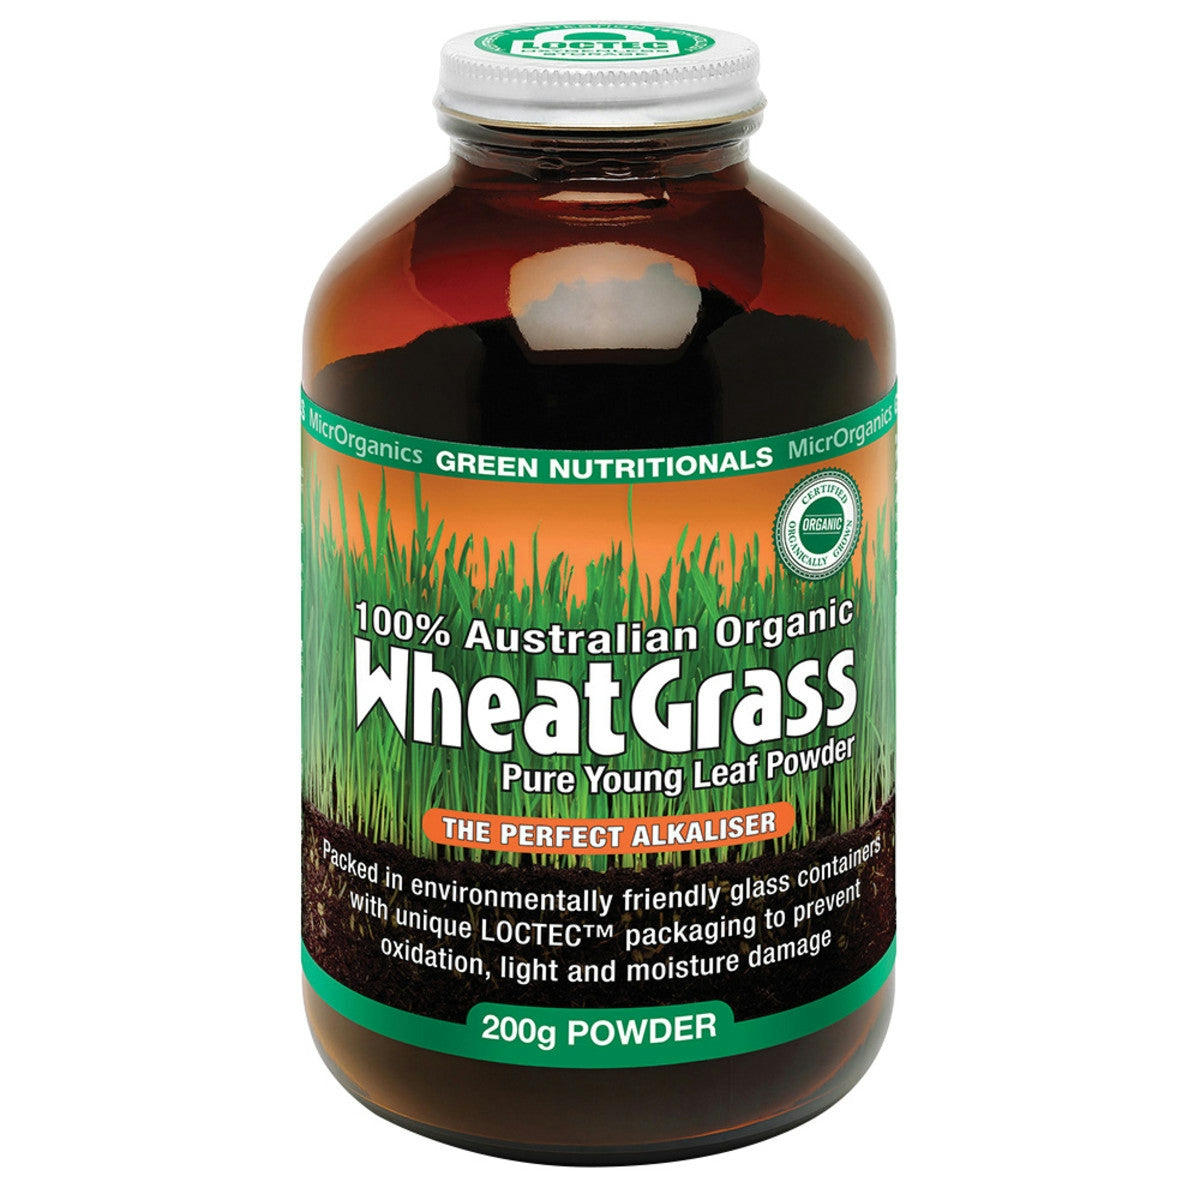 image of MicrOrganics Green Nutritionals Organic Australian WheatGrass 200g Powder on white background